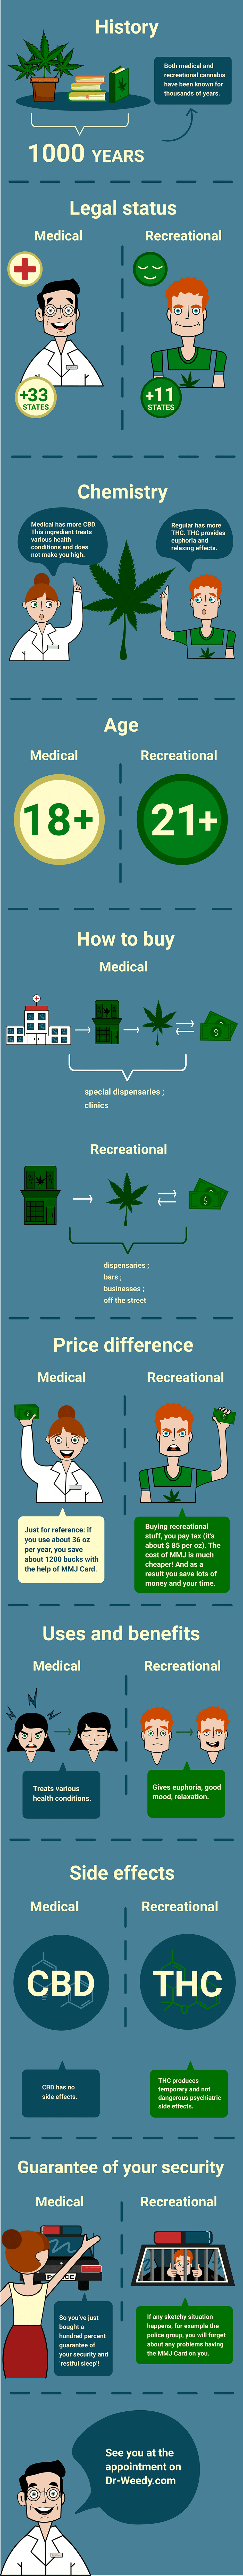 Dr.Weedy 420 evaluations online. Medical marijuana vs Recreational cannabis